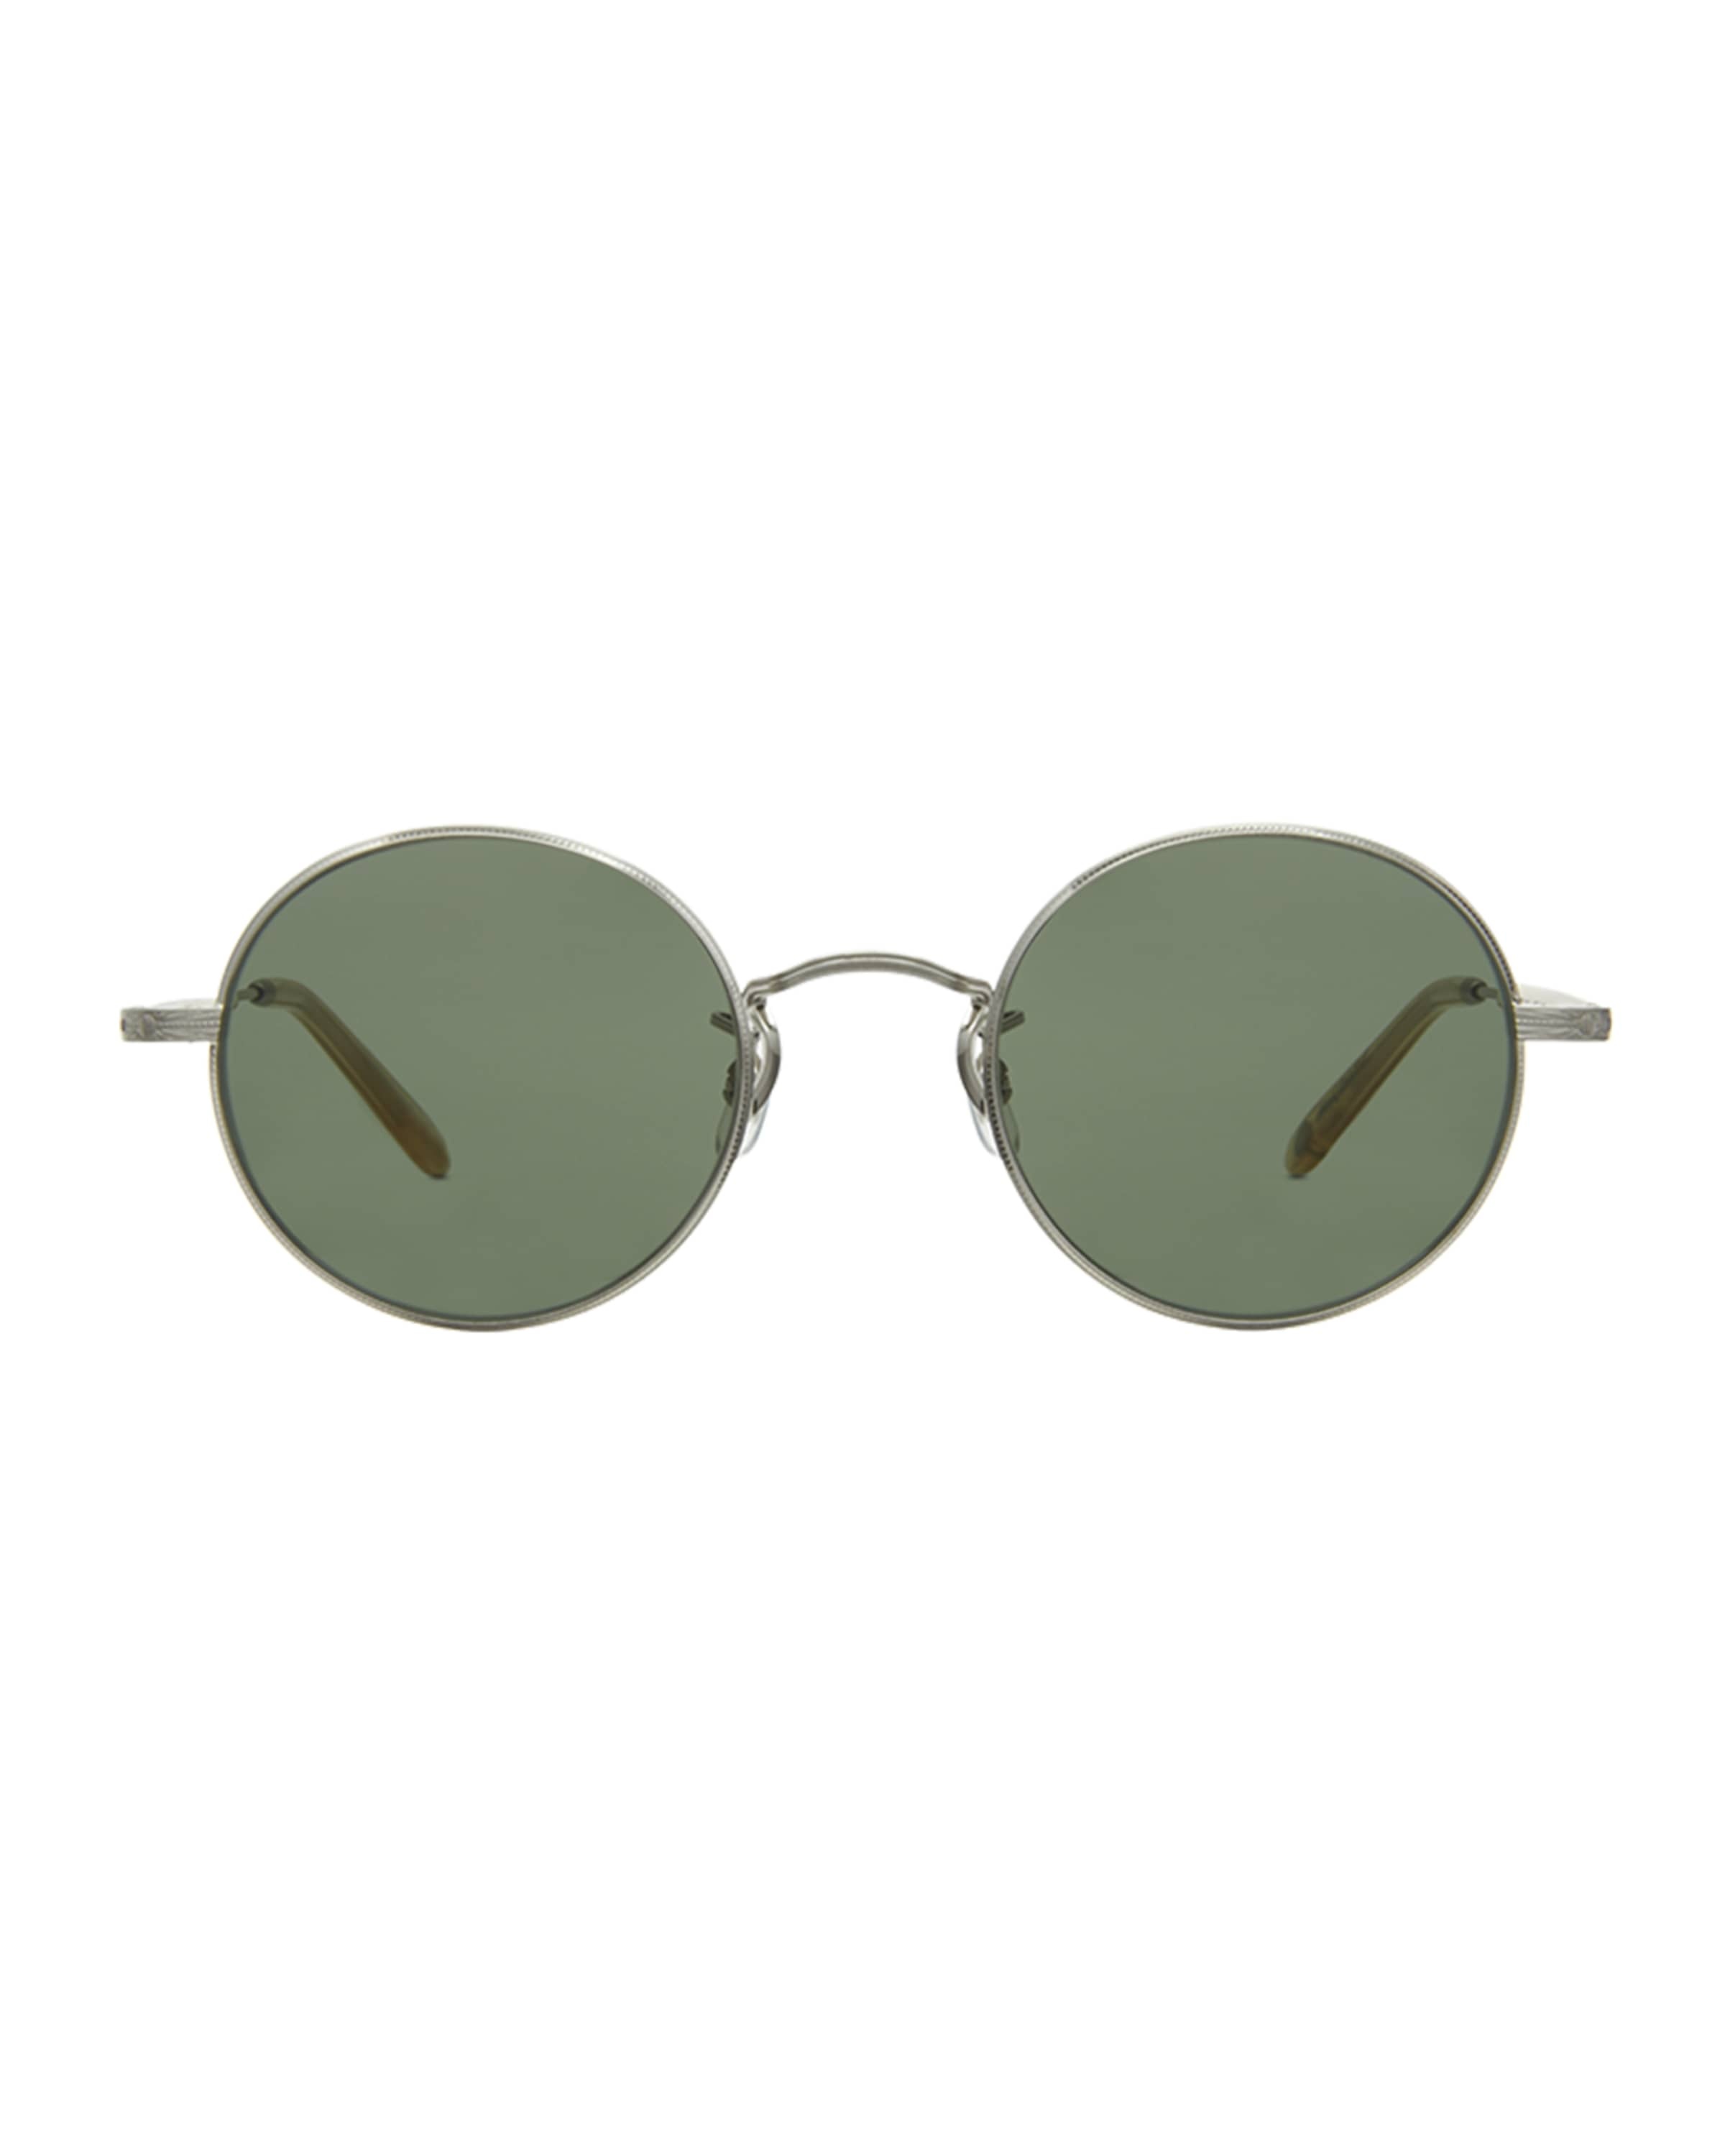 Men's Lovers 46 Round Sunglasses - 2